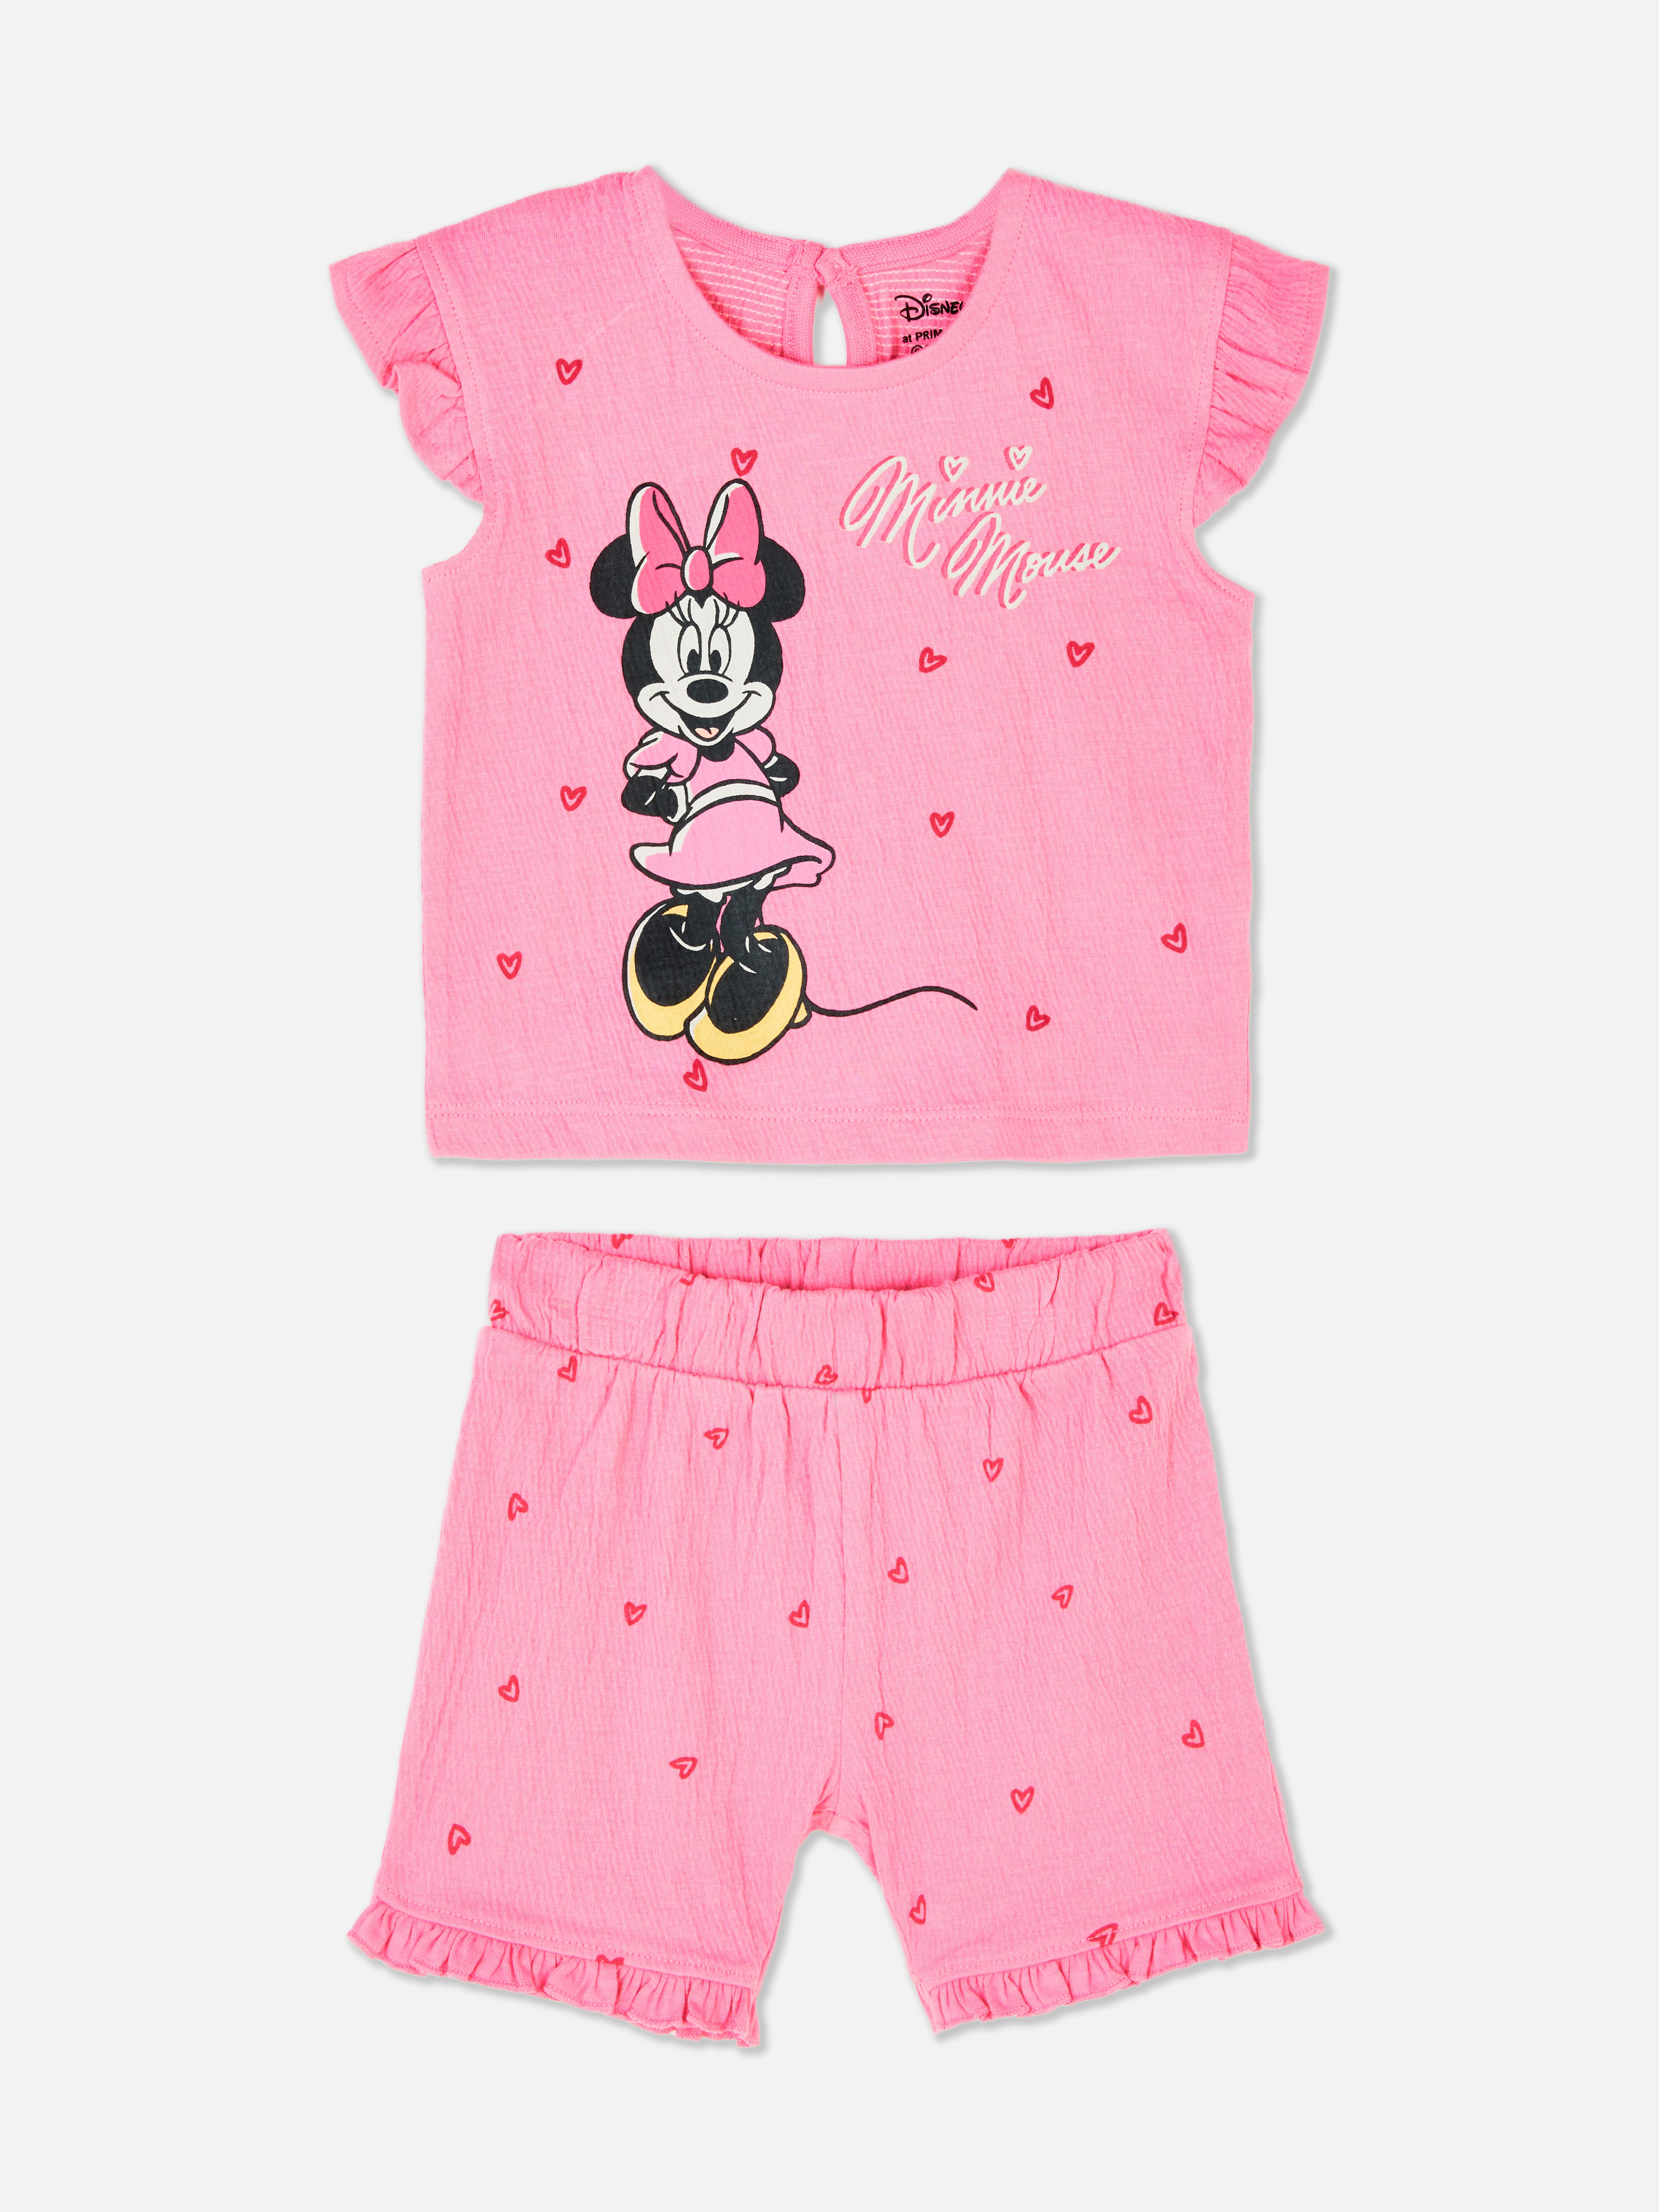 Disney's Minnie Mouse Short Sleeve Crinkle Clothing Set